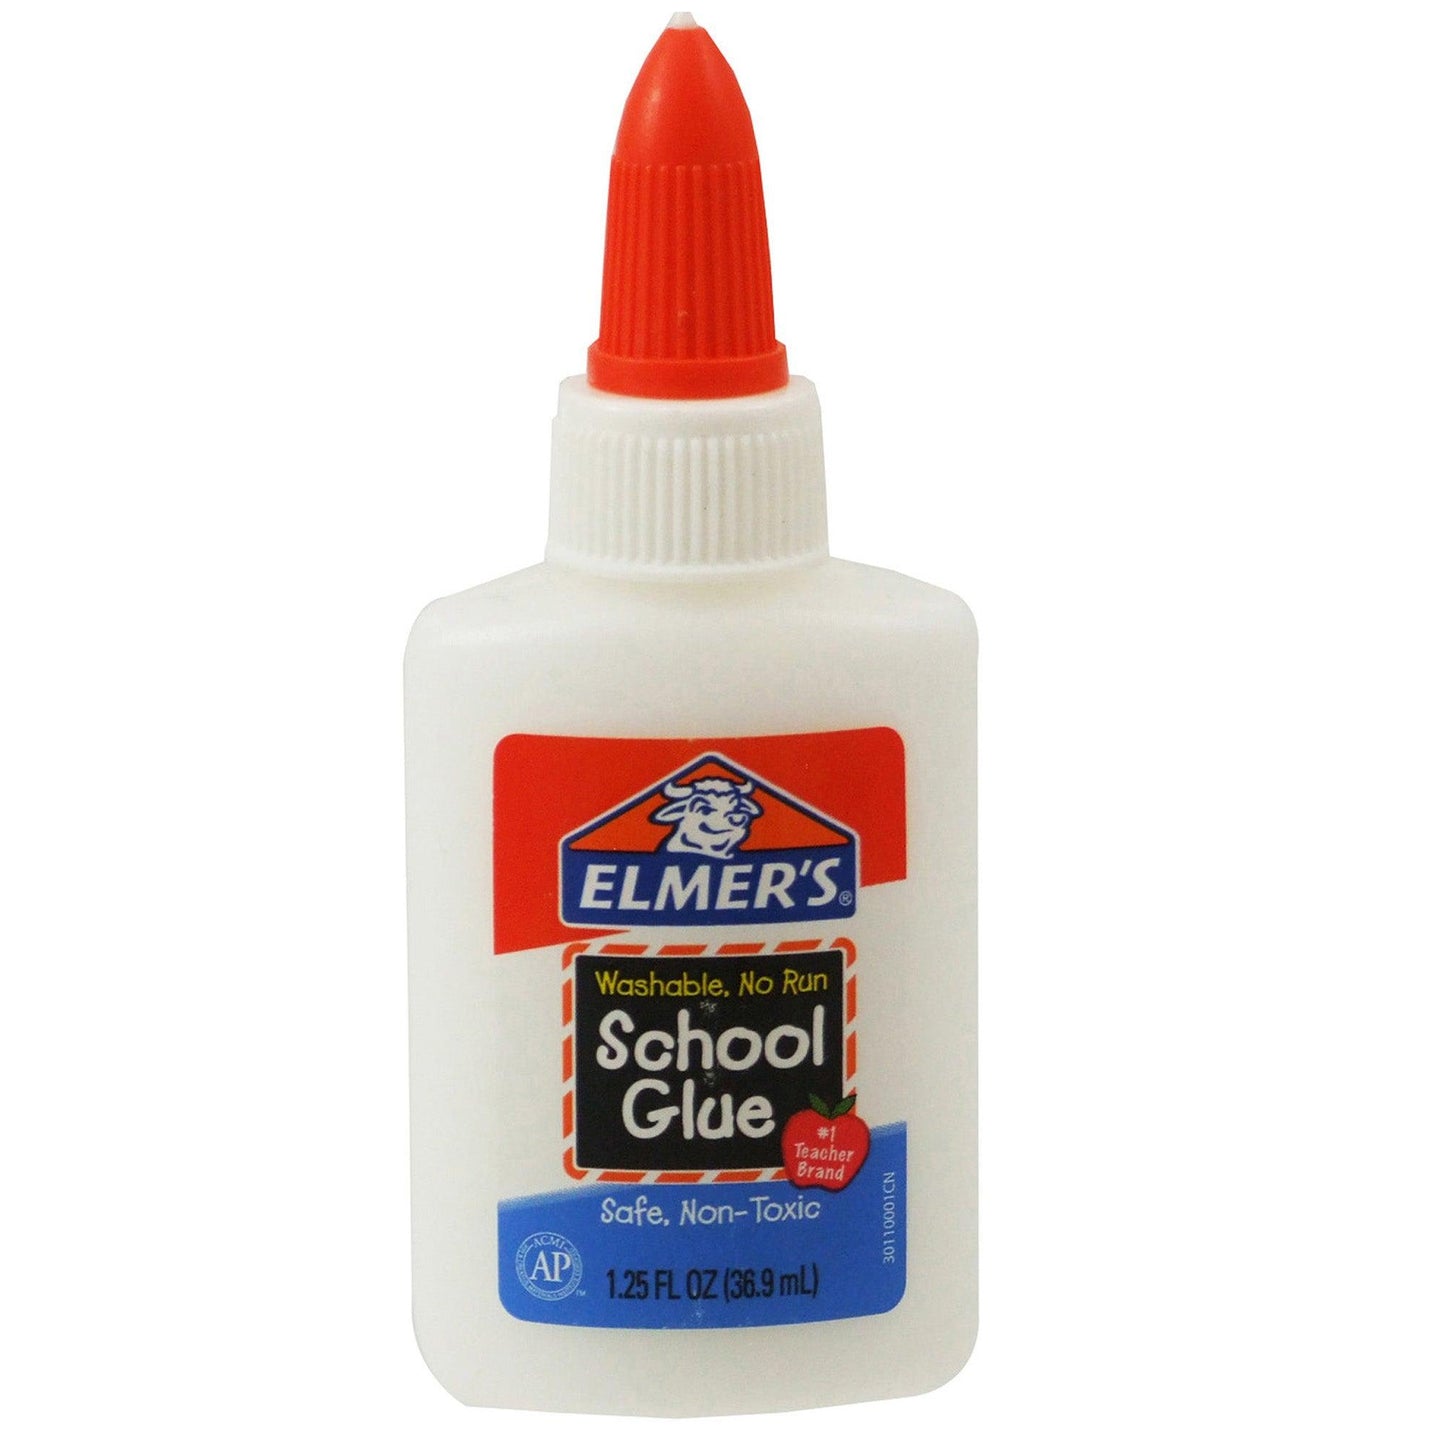 Washable School Glue, 1.25 oz. Bottle, Pack of 24 - Loomini